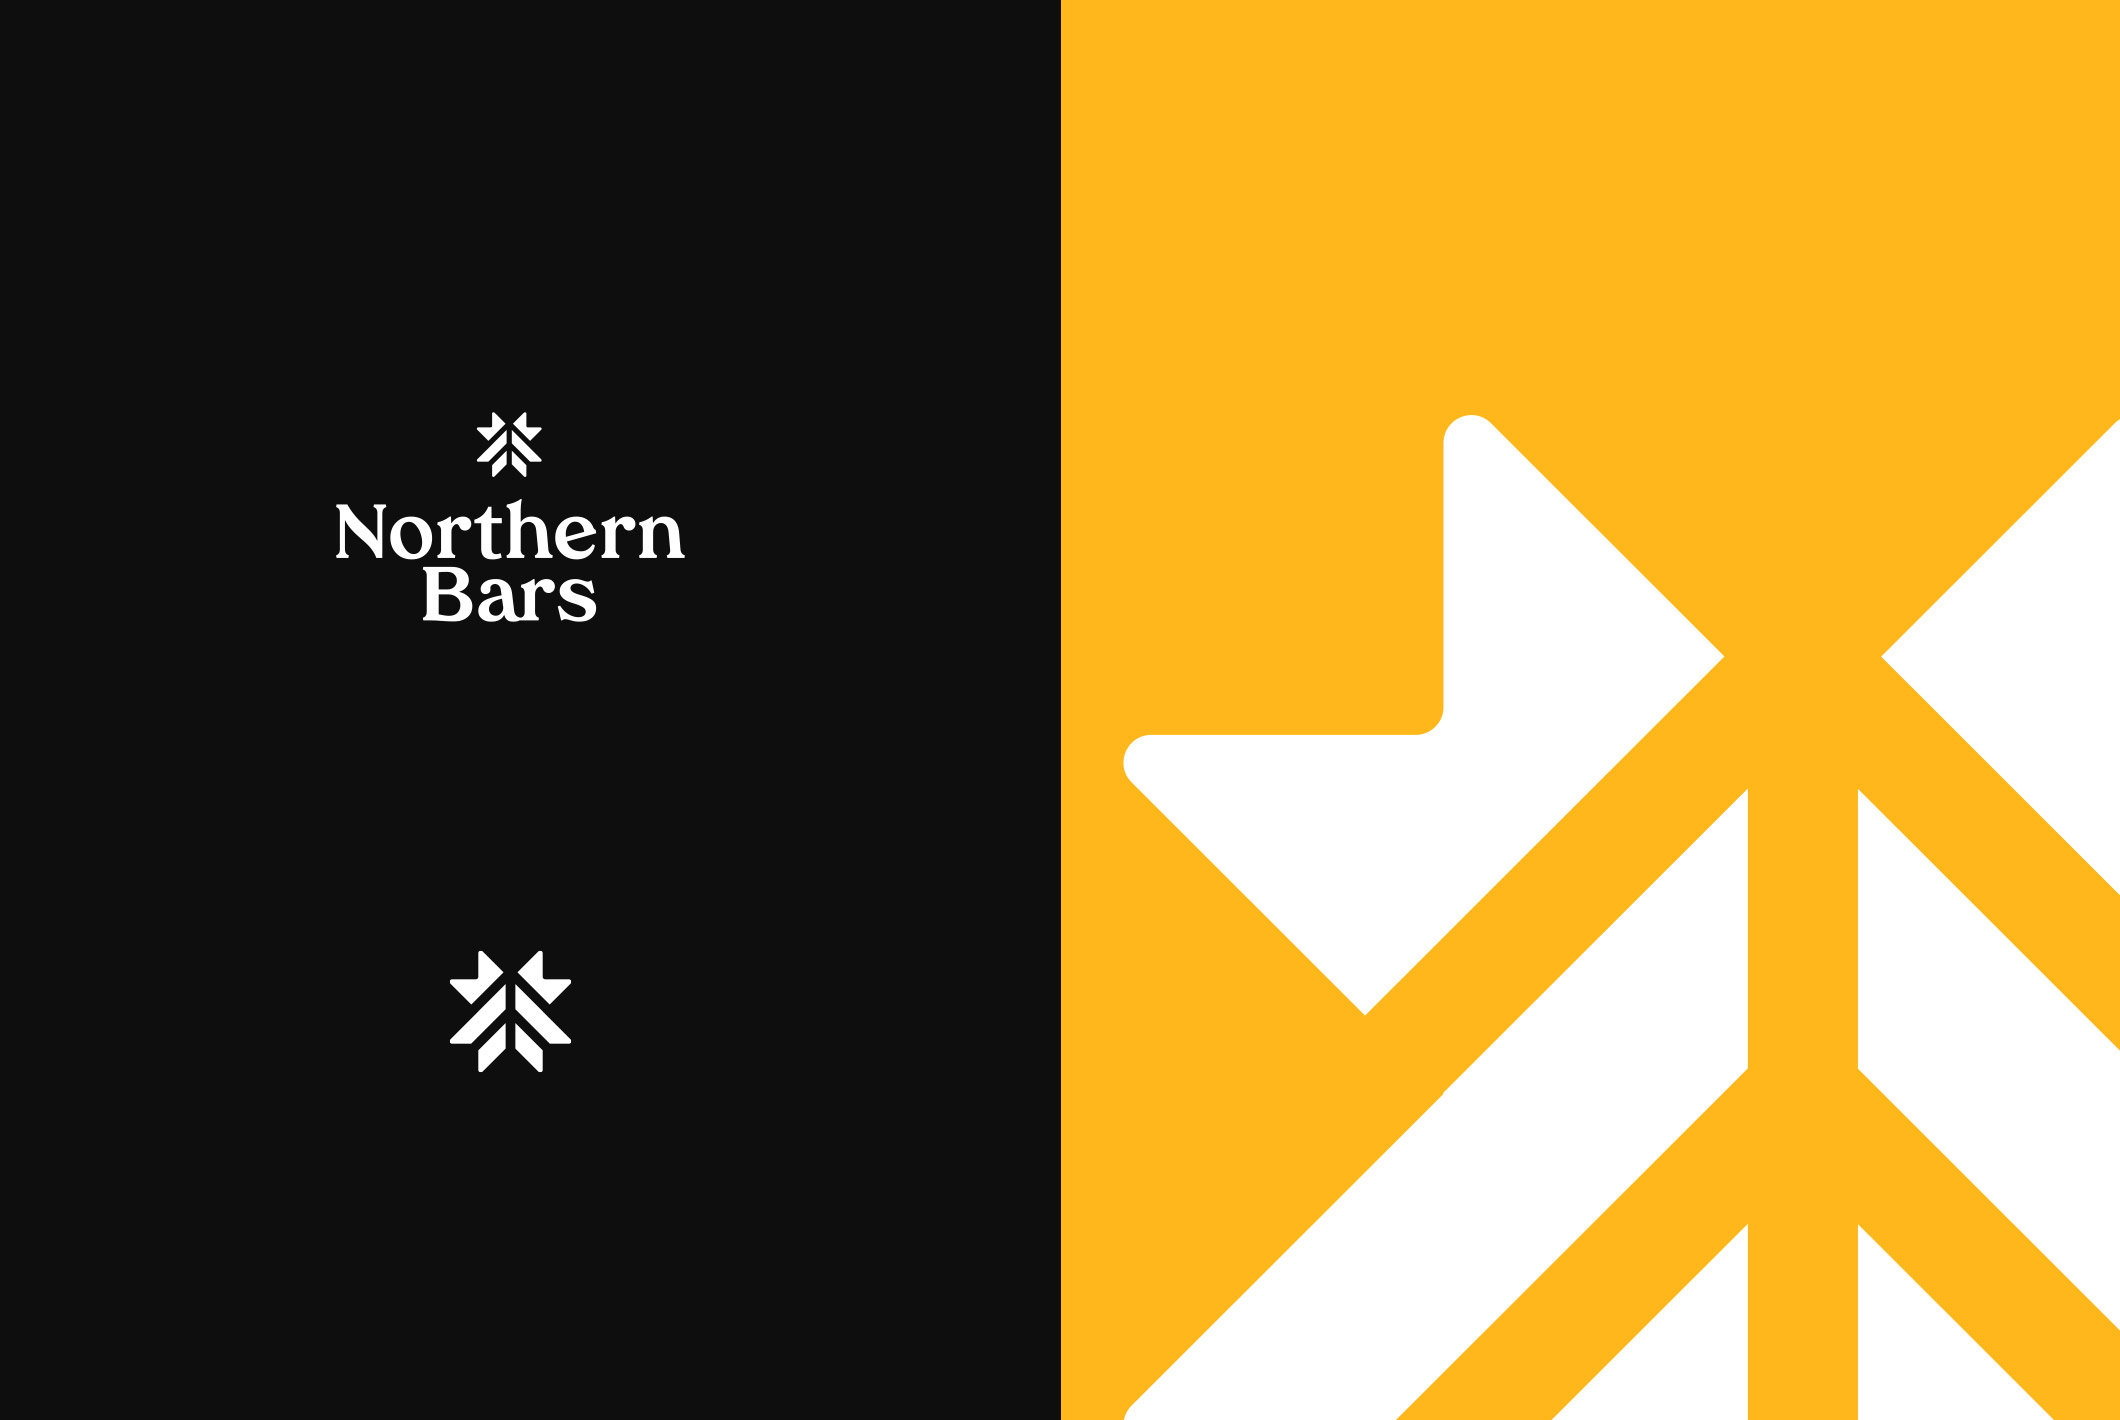 Northern Bars